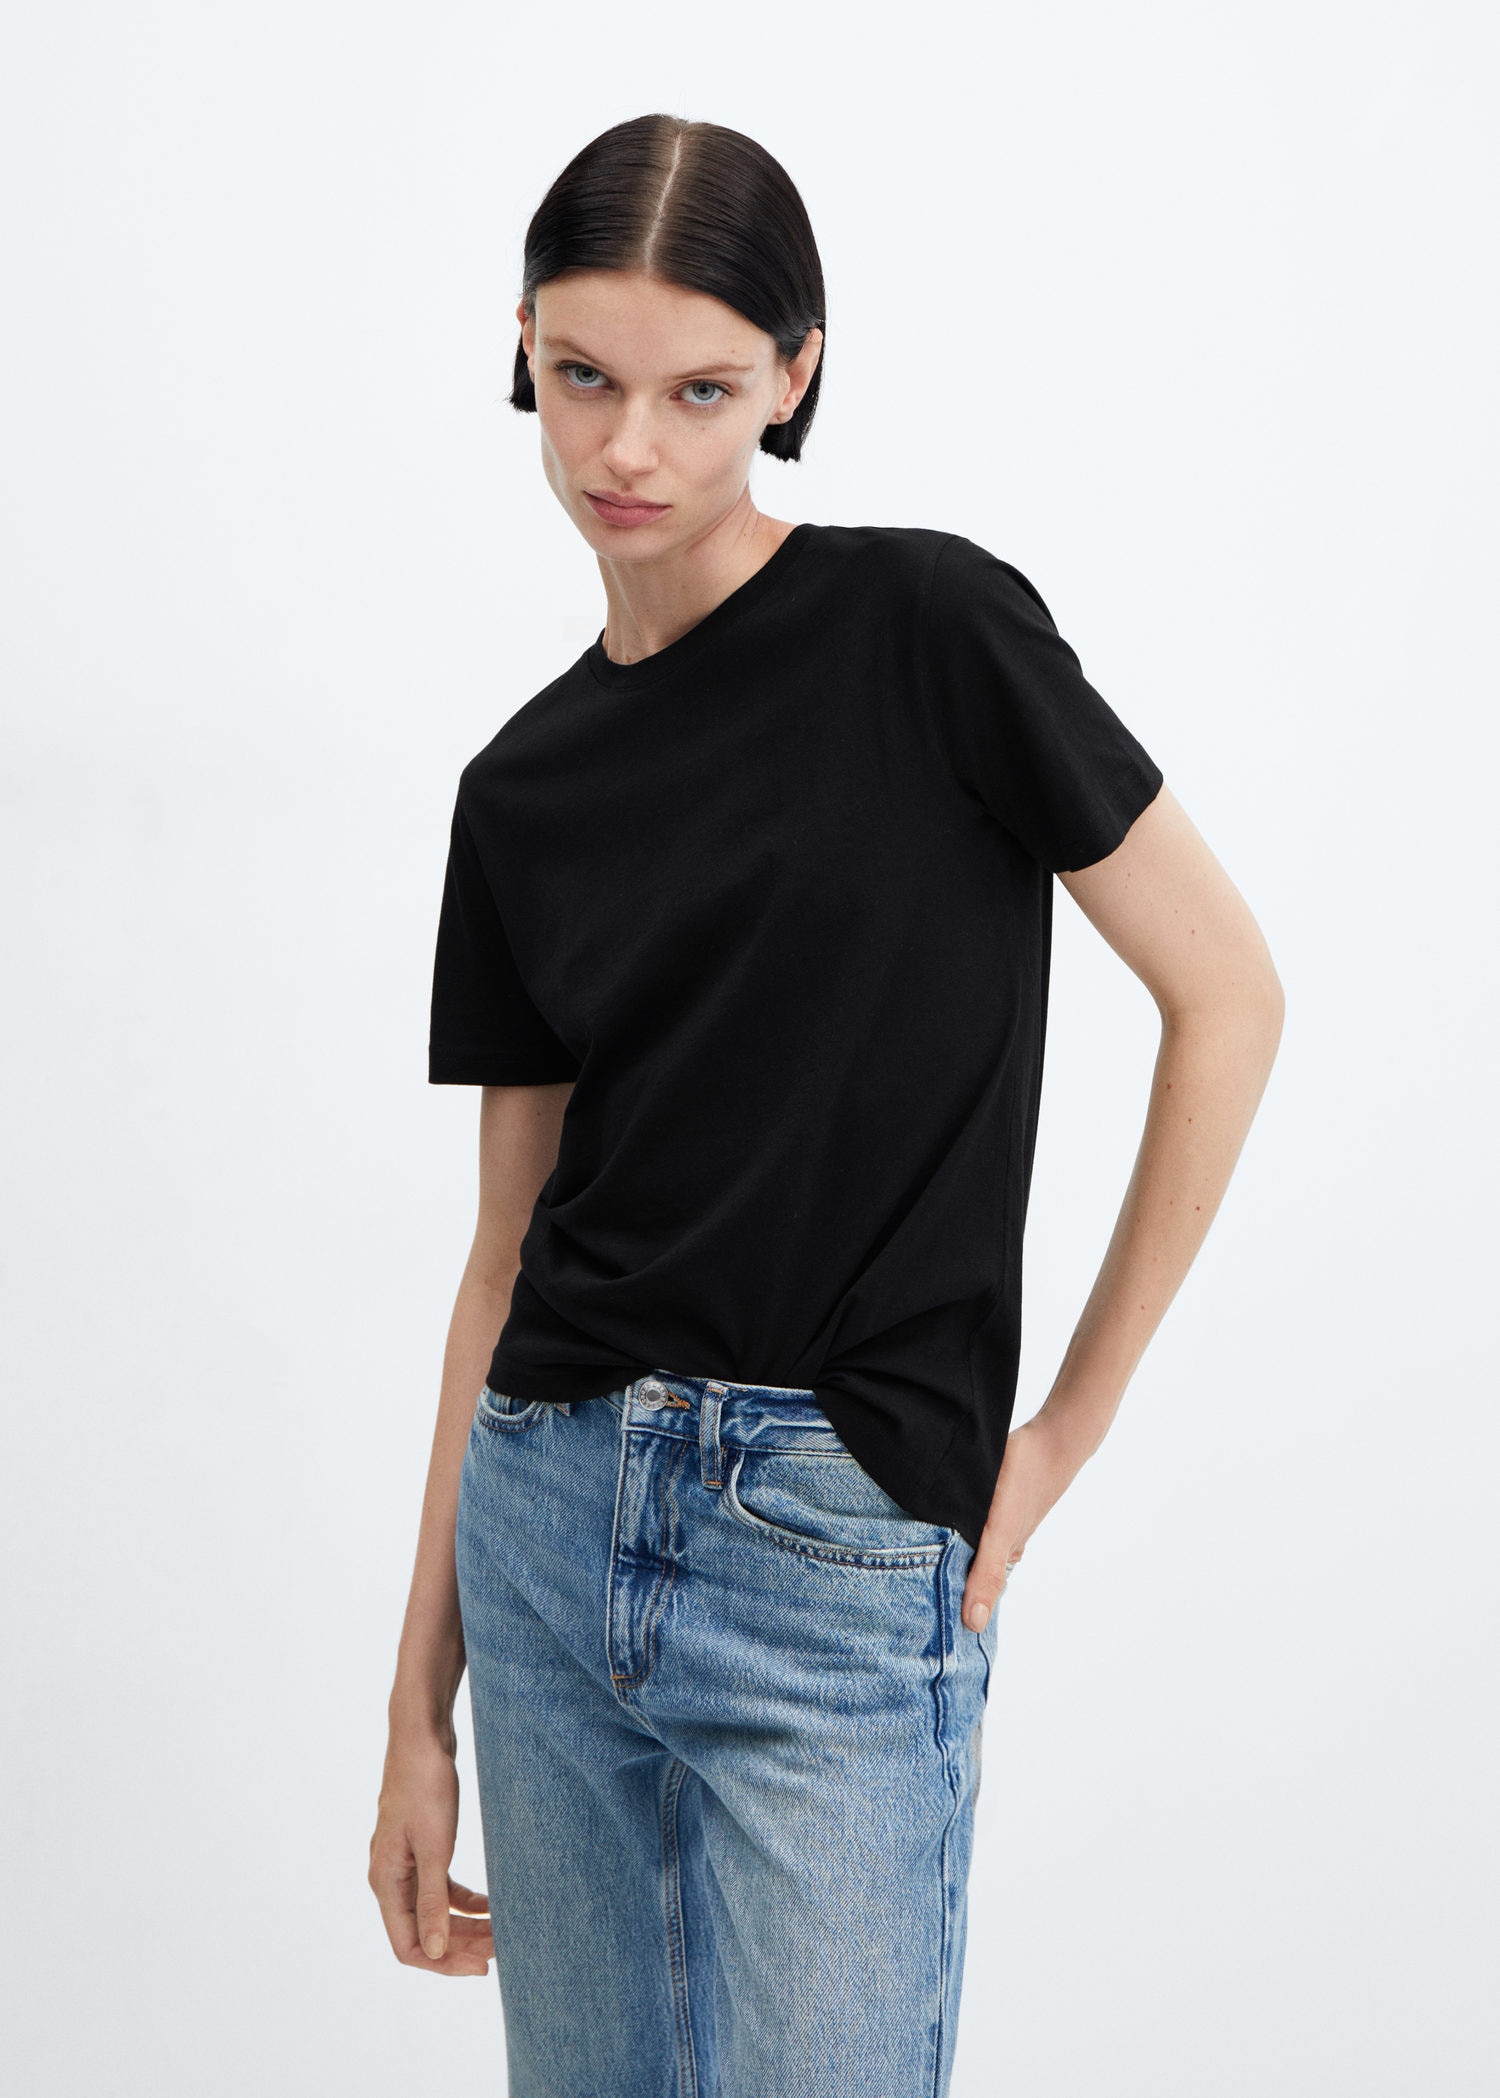 Short Sleeve Cotton T Shirt - Black